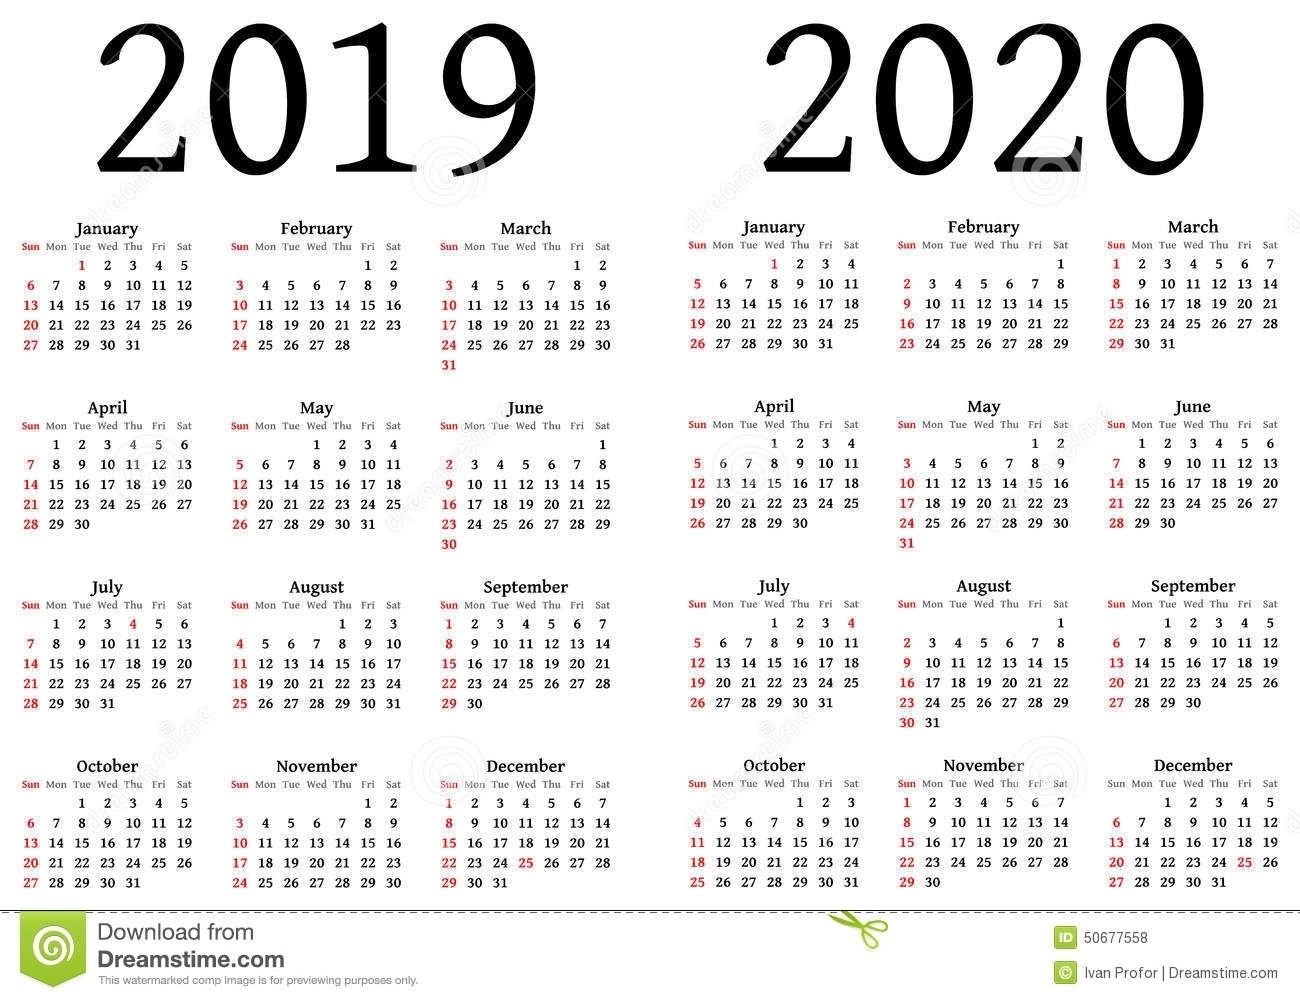 Pocket Printable 2019-2020 Calendar Free - Calendar regarding Free Printable Pocket Size Calendars 2019-2020